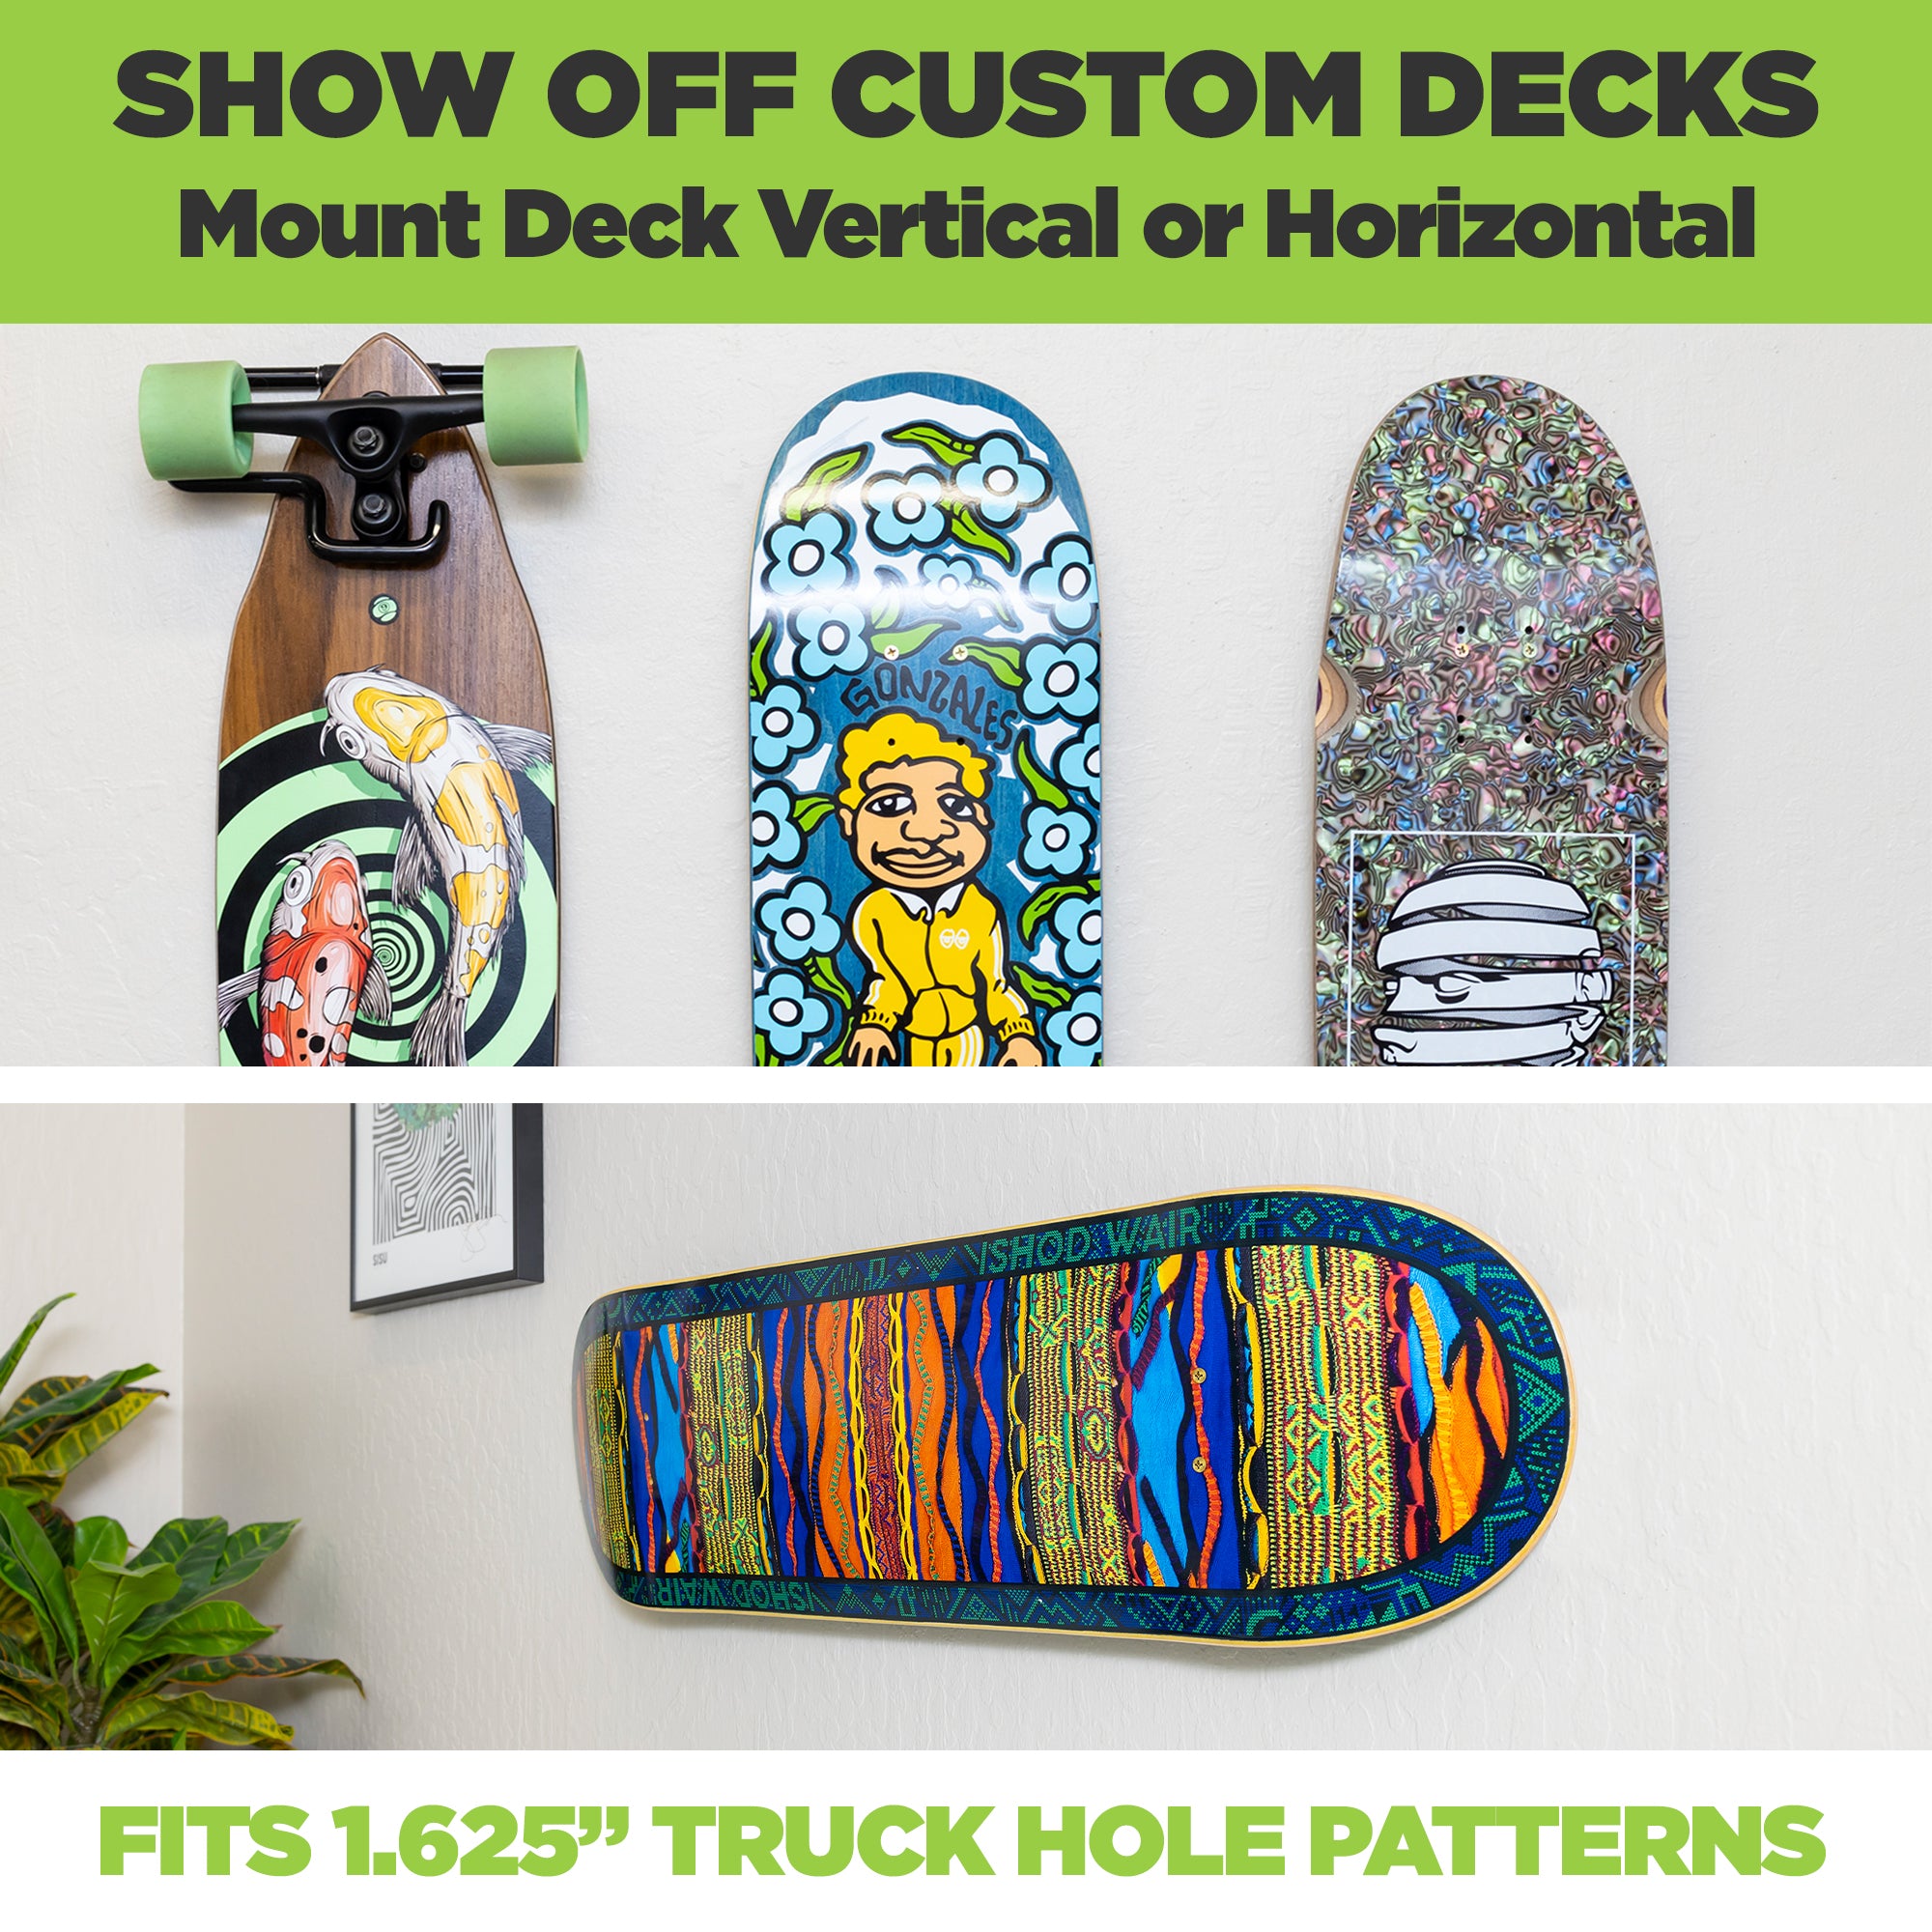 Wall mount skateboard decks vertical or horizontal in the HIDEit Skate Deck Mount. The HIDEit Deck Display fits 1.625" truck hole patterns. 